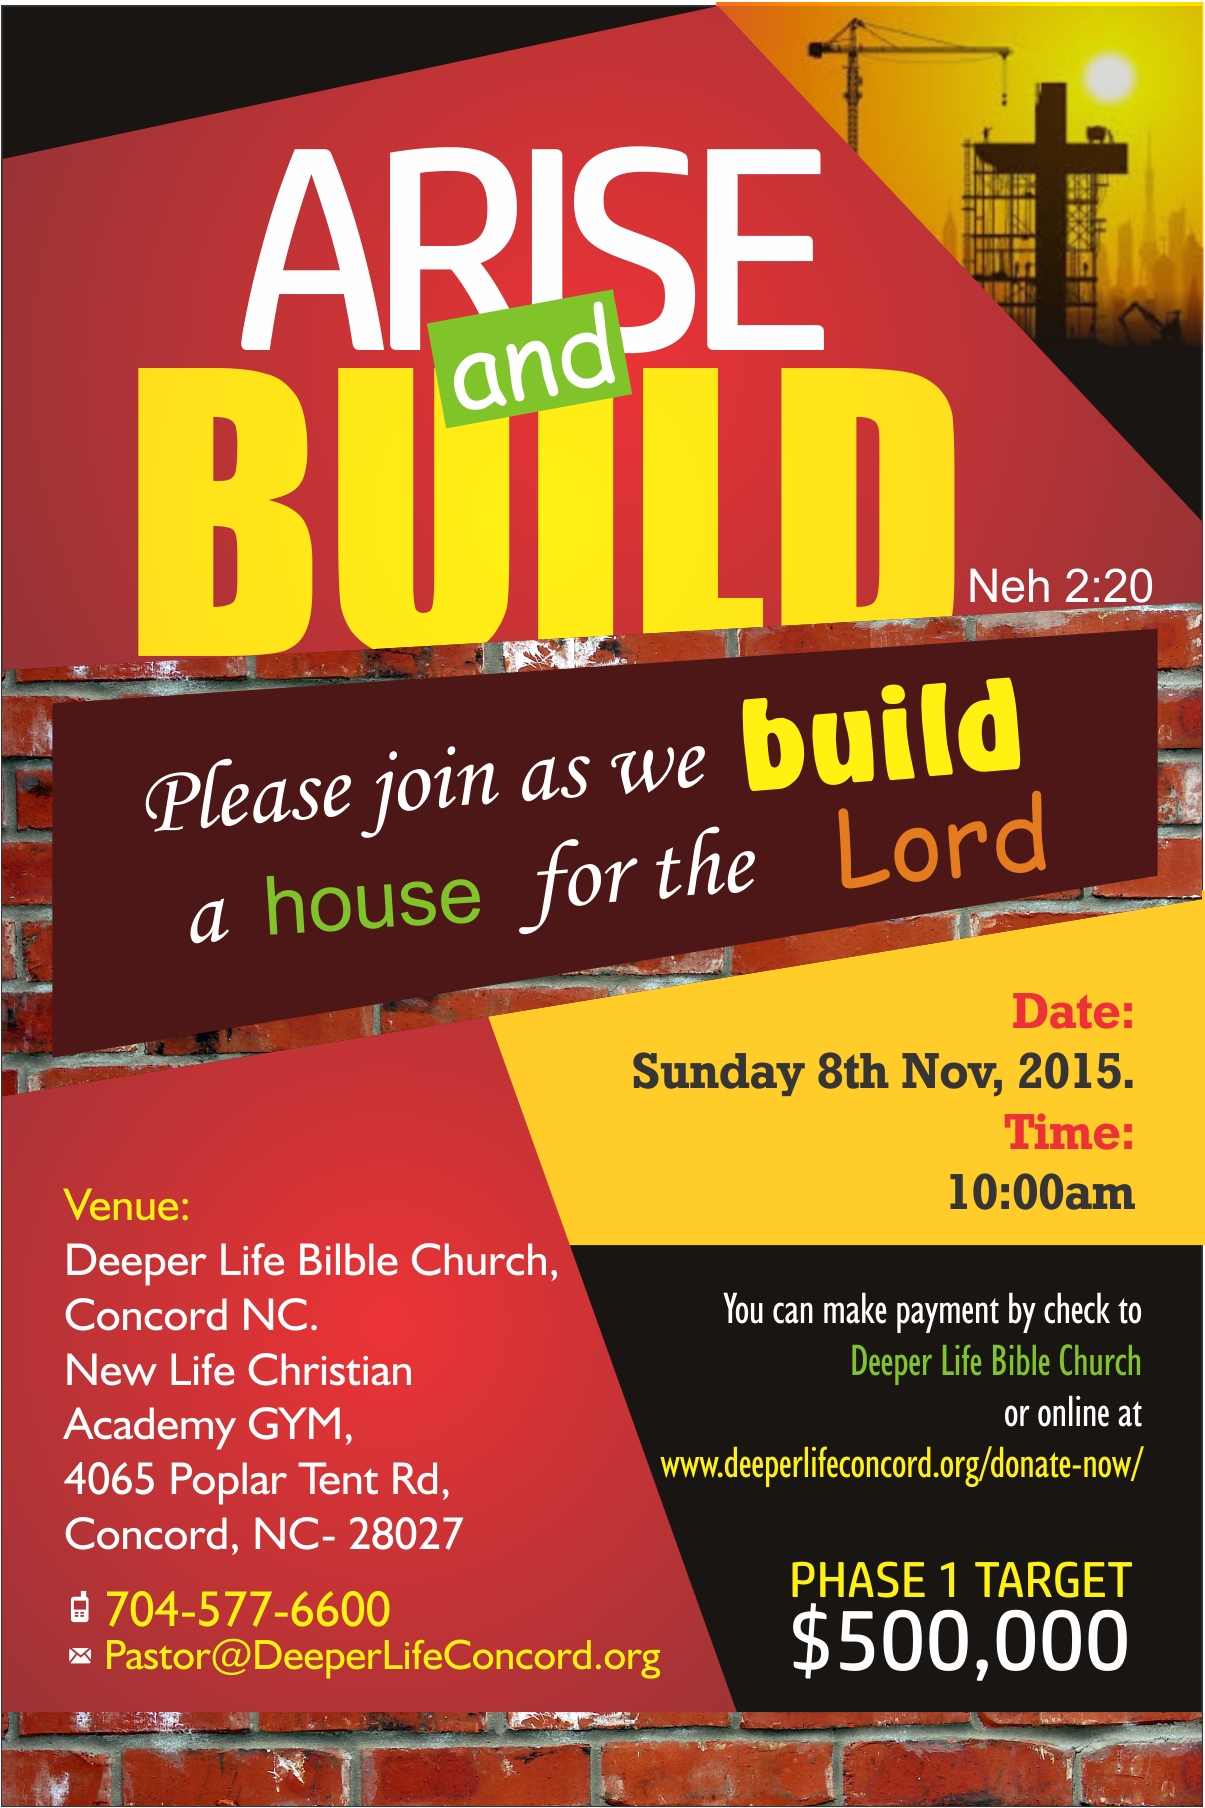 Deeper Life Bible Church Concord, North Carolina | Arise and Build